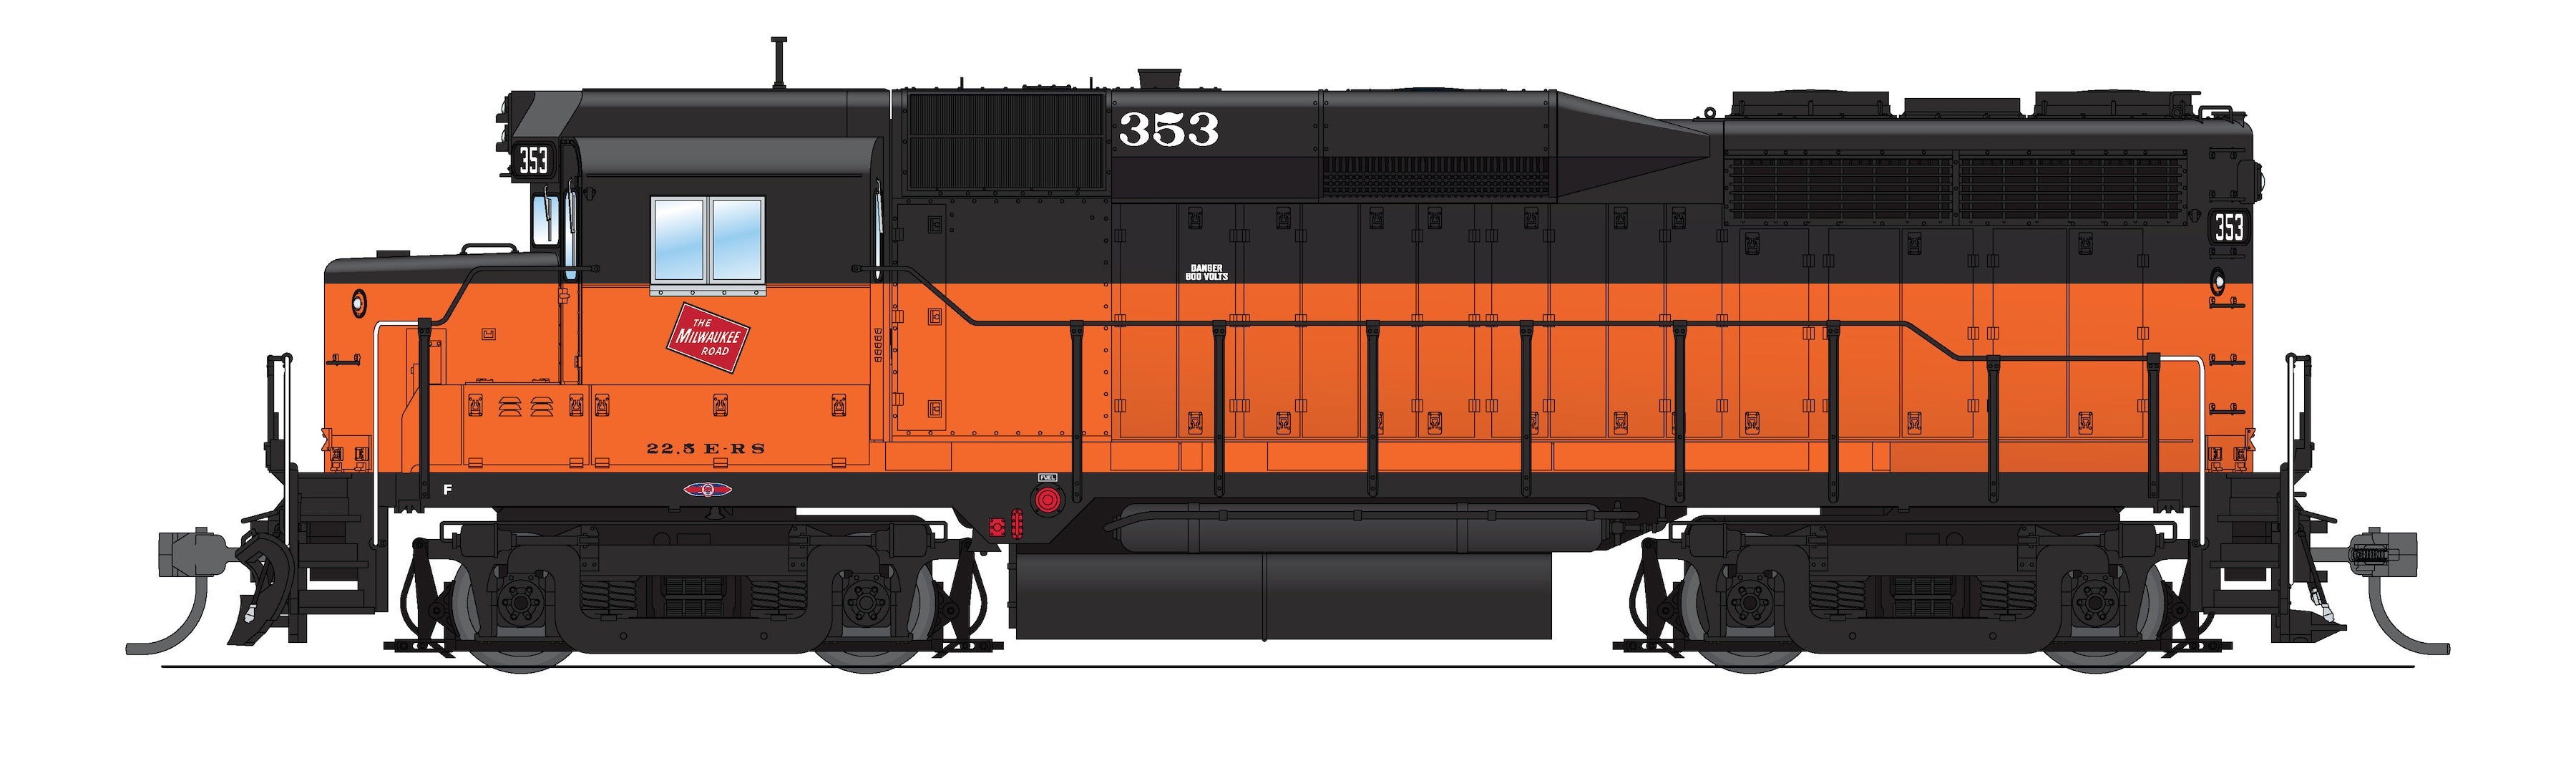 9154 EMD GP30, MILW 354, Orange & Black, No-Sound/DCC-Ready, HO